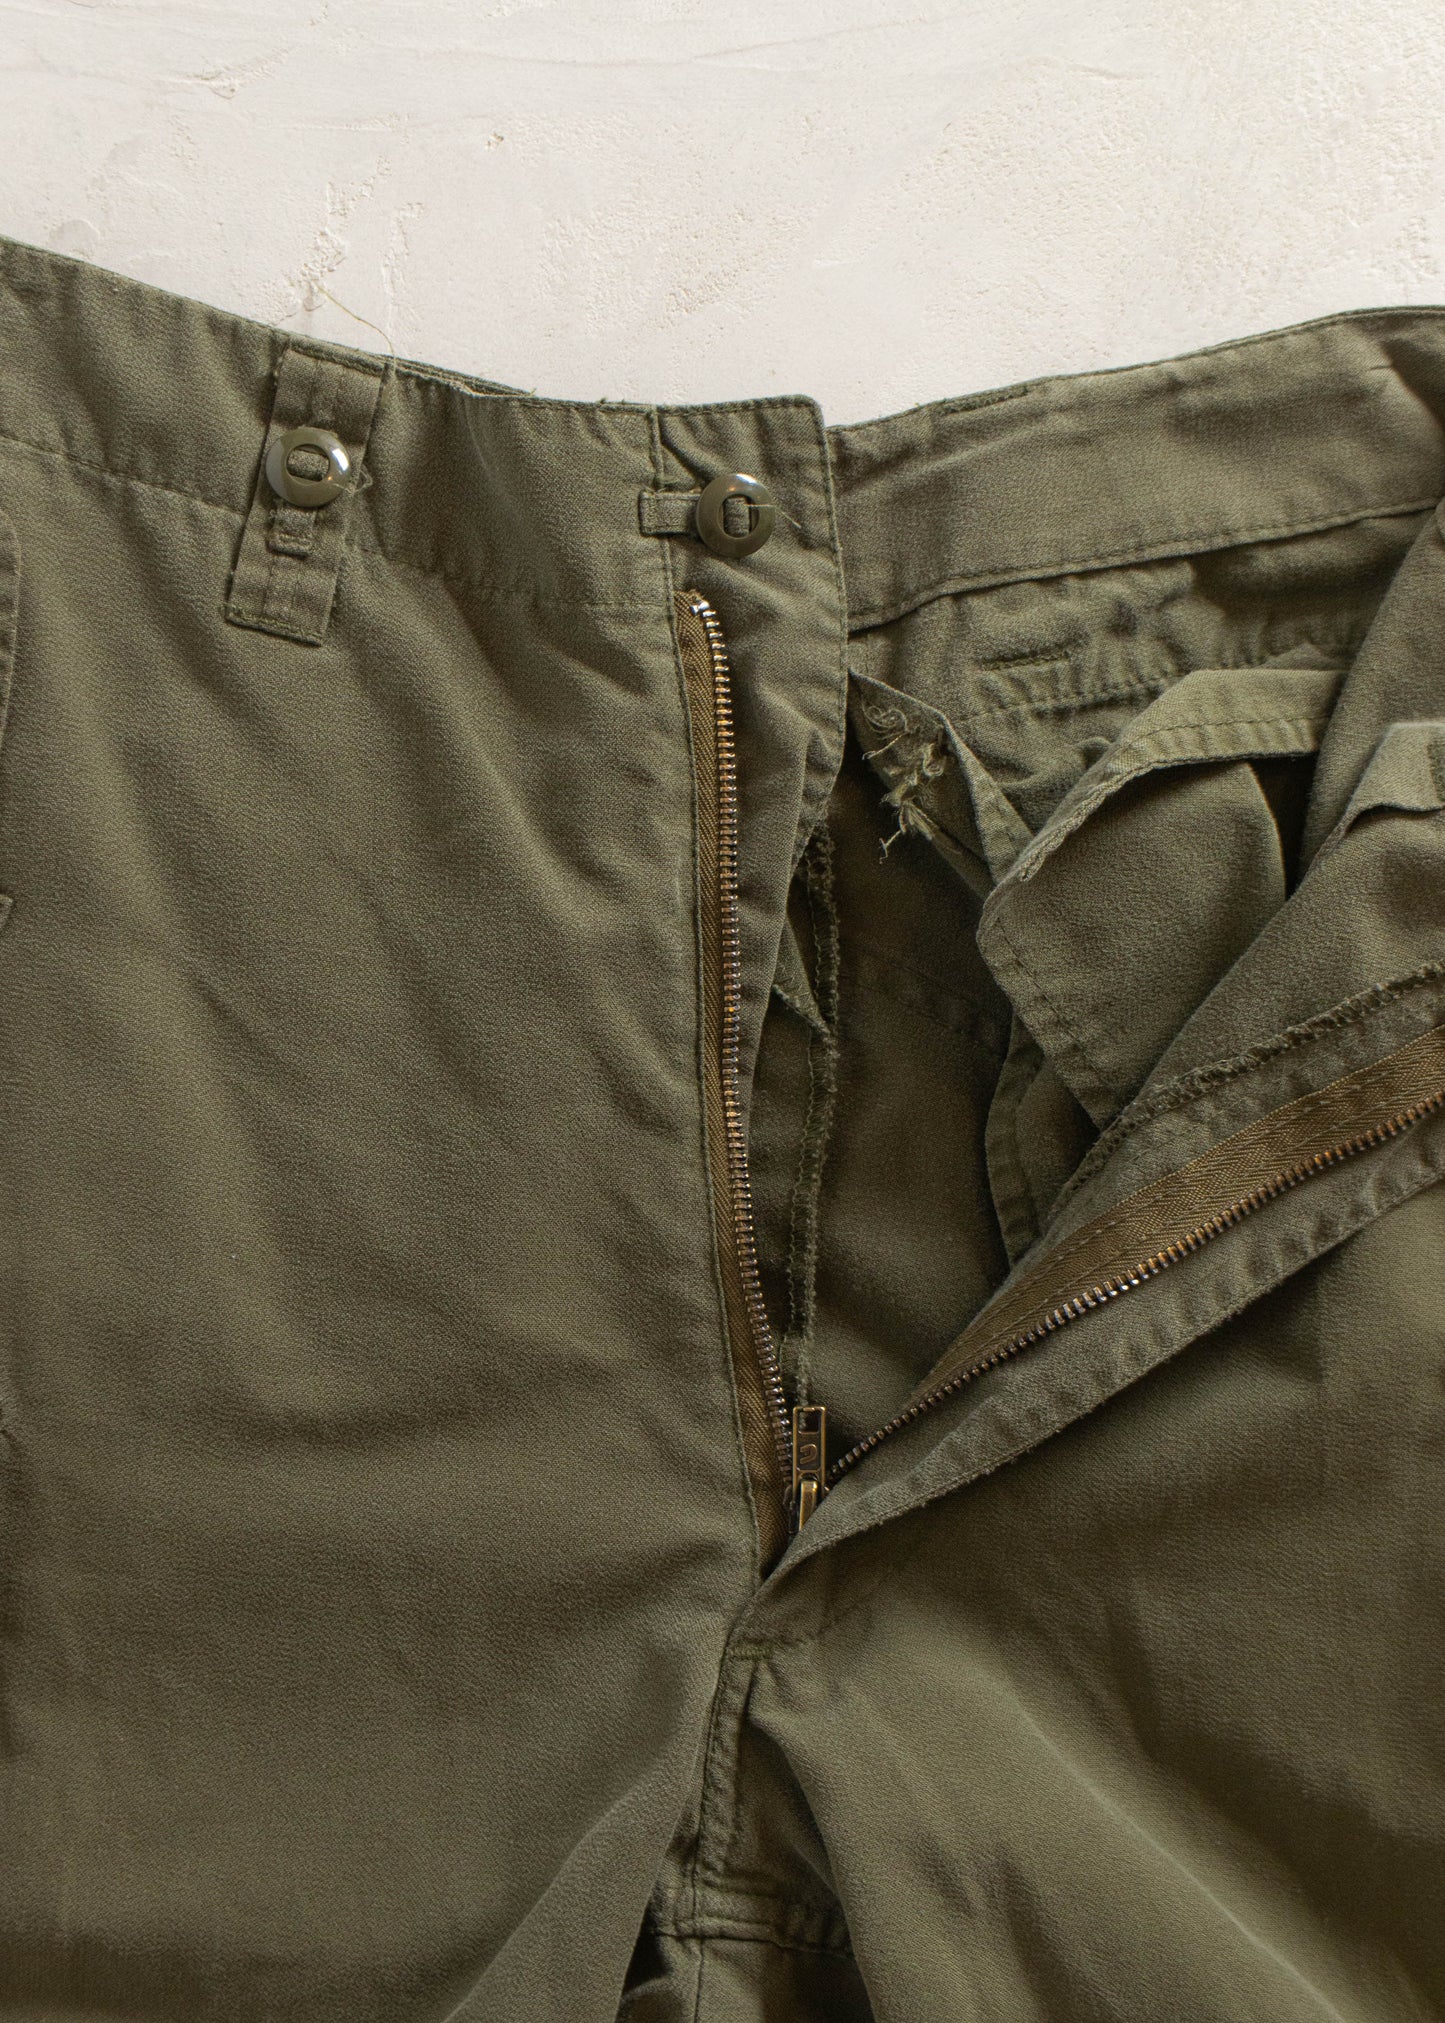 1990s Military Cargo Pants Size Women's 29 Men's 32